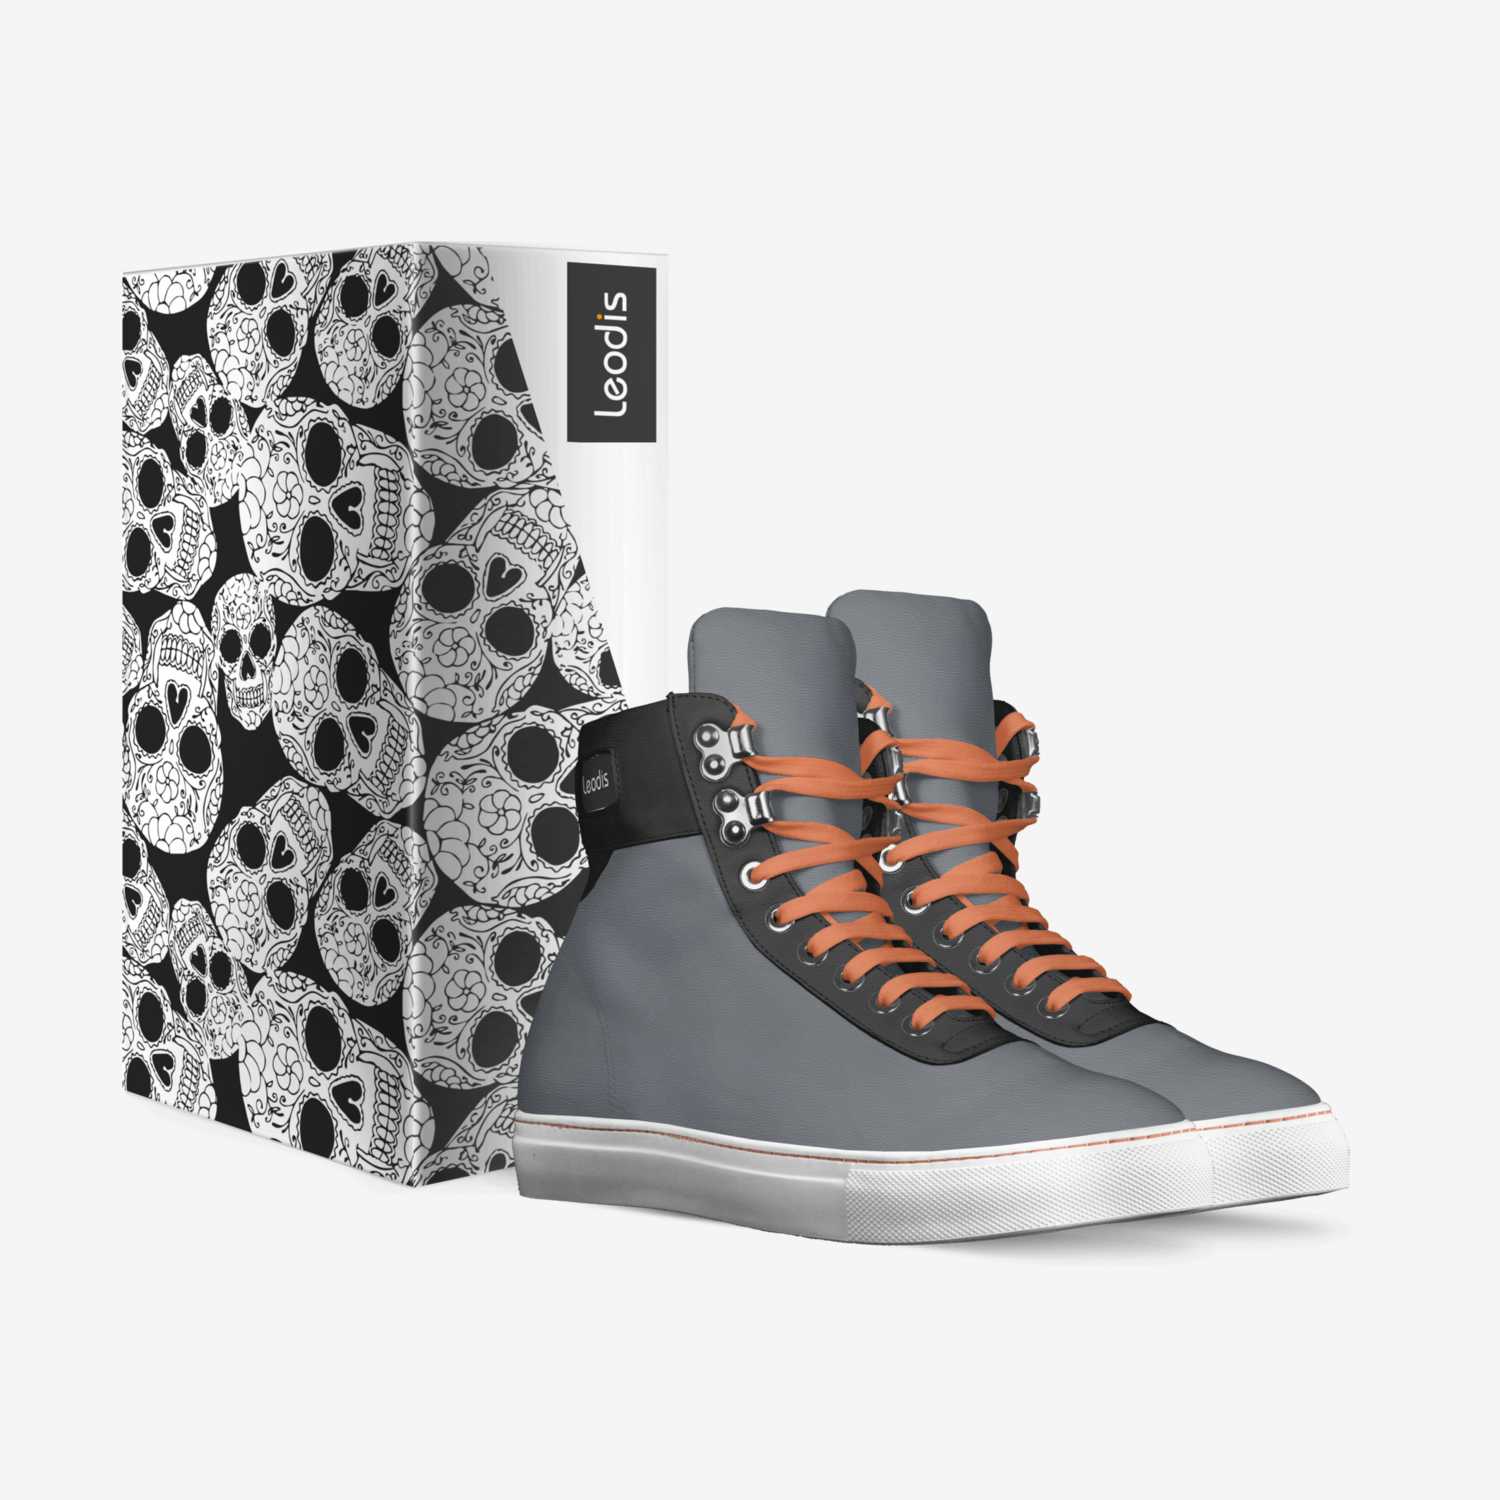 Leodis custom made in Italy shoes by John Barlow | Box view